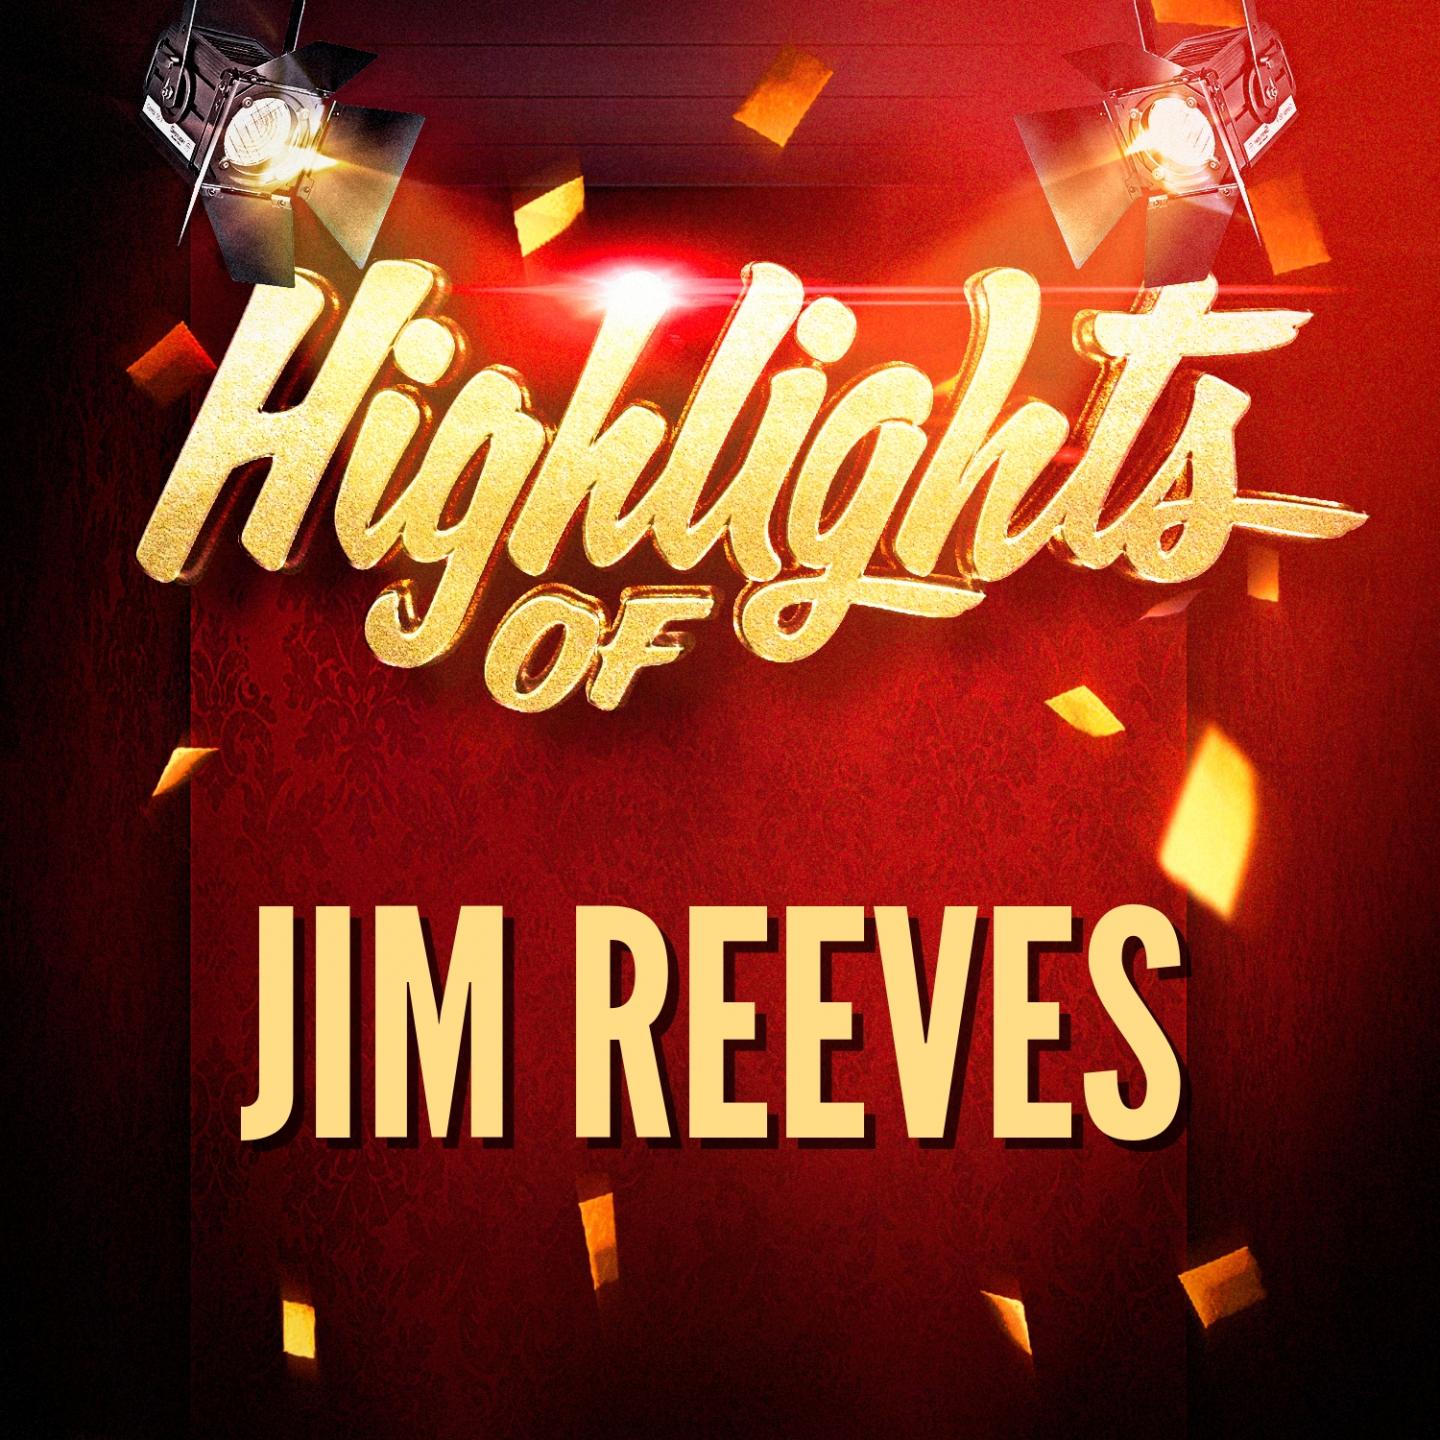 Highlights of Jim Reeves